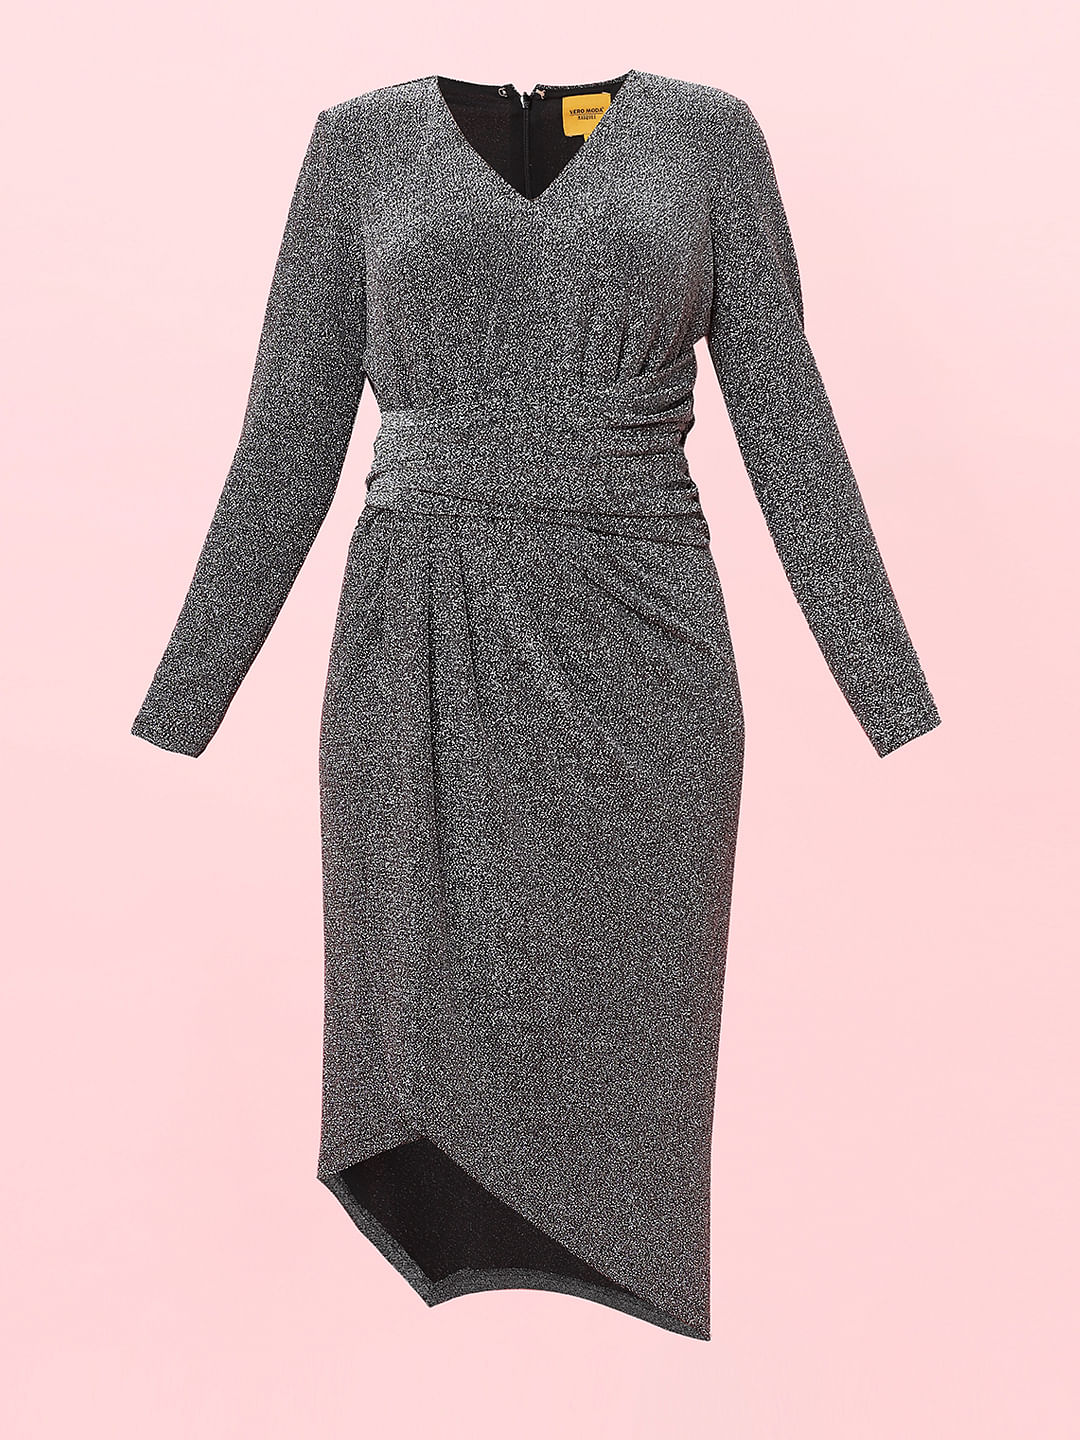 valentina draped dress Archives - Designer Stitch